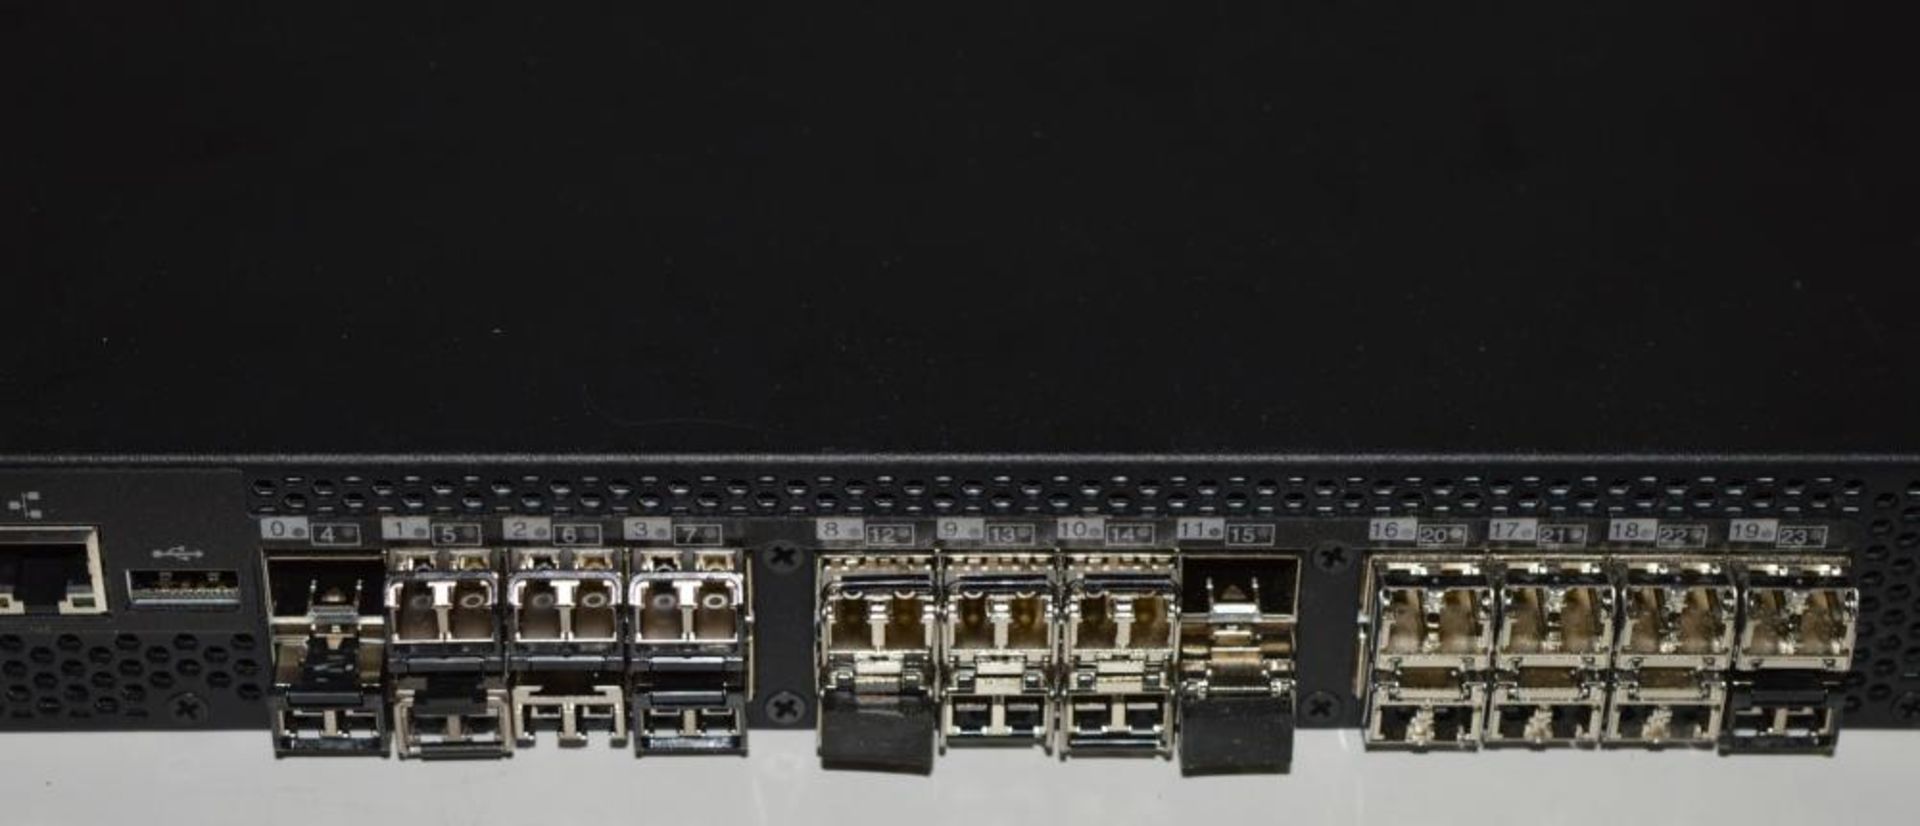 1 x IBM 24 port Fibre Switch - Model 249824E / 2498-B24/24E - Includes Transceivers and Rack Mount R - Image 4 of 5